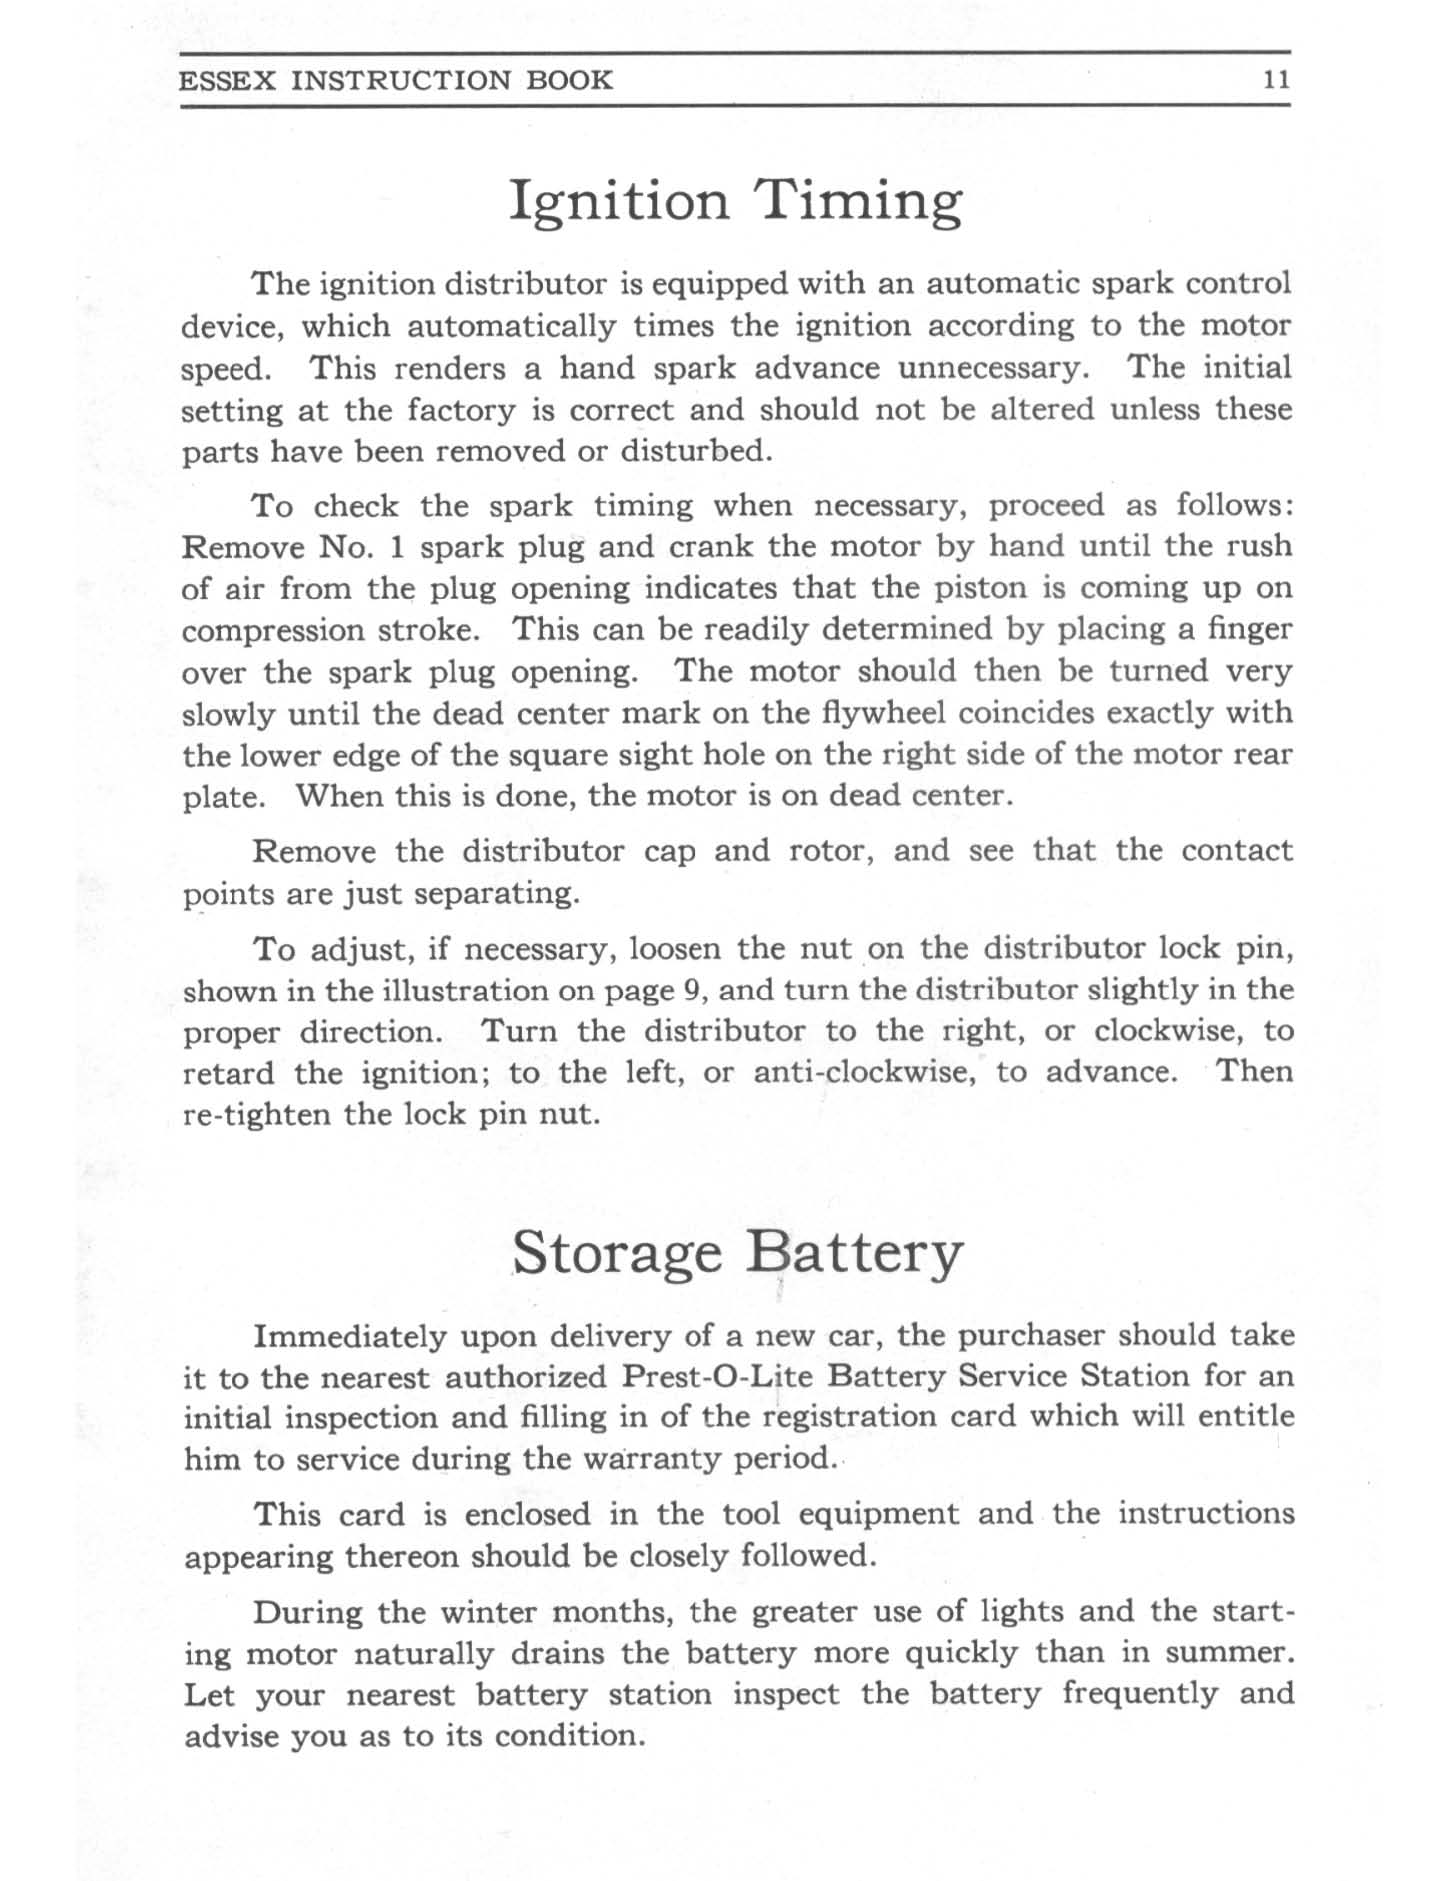 1927 Essex Instruction Book-13